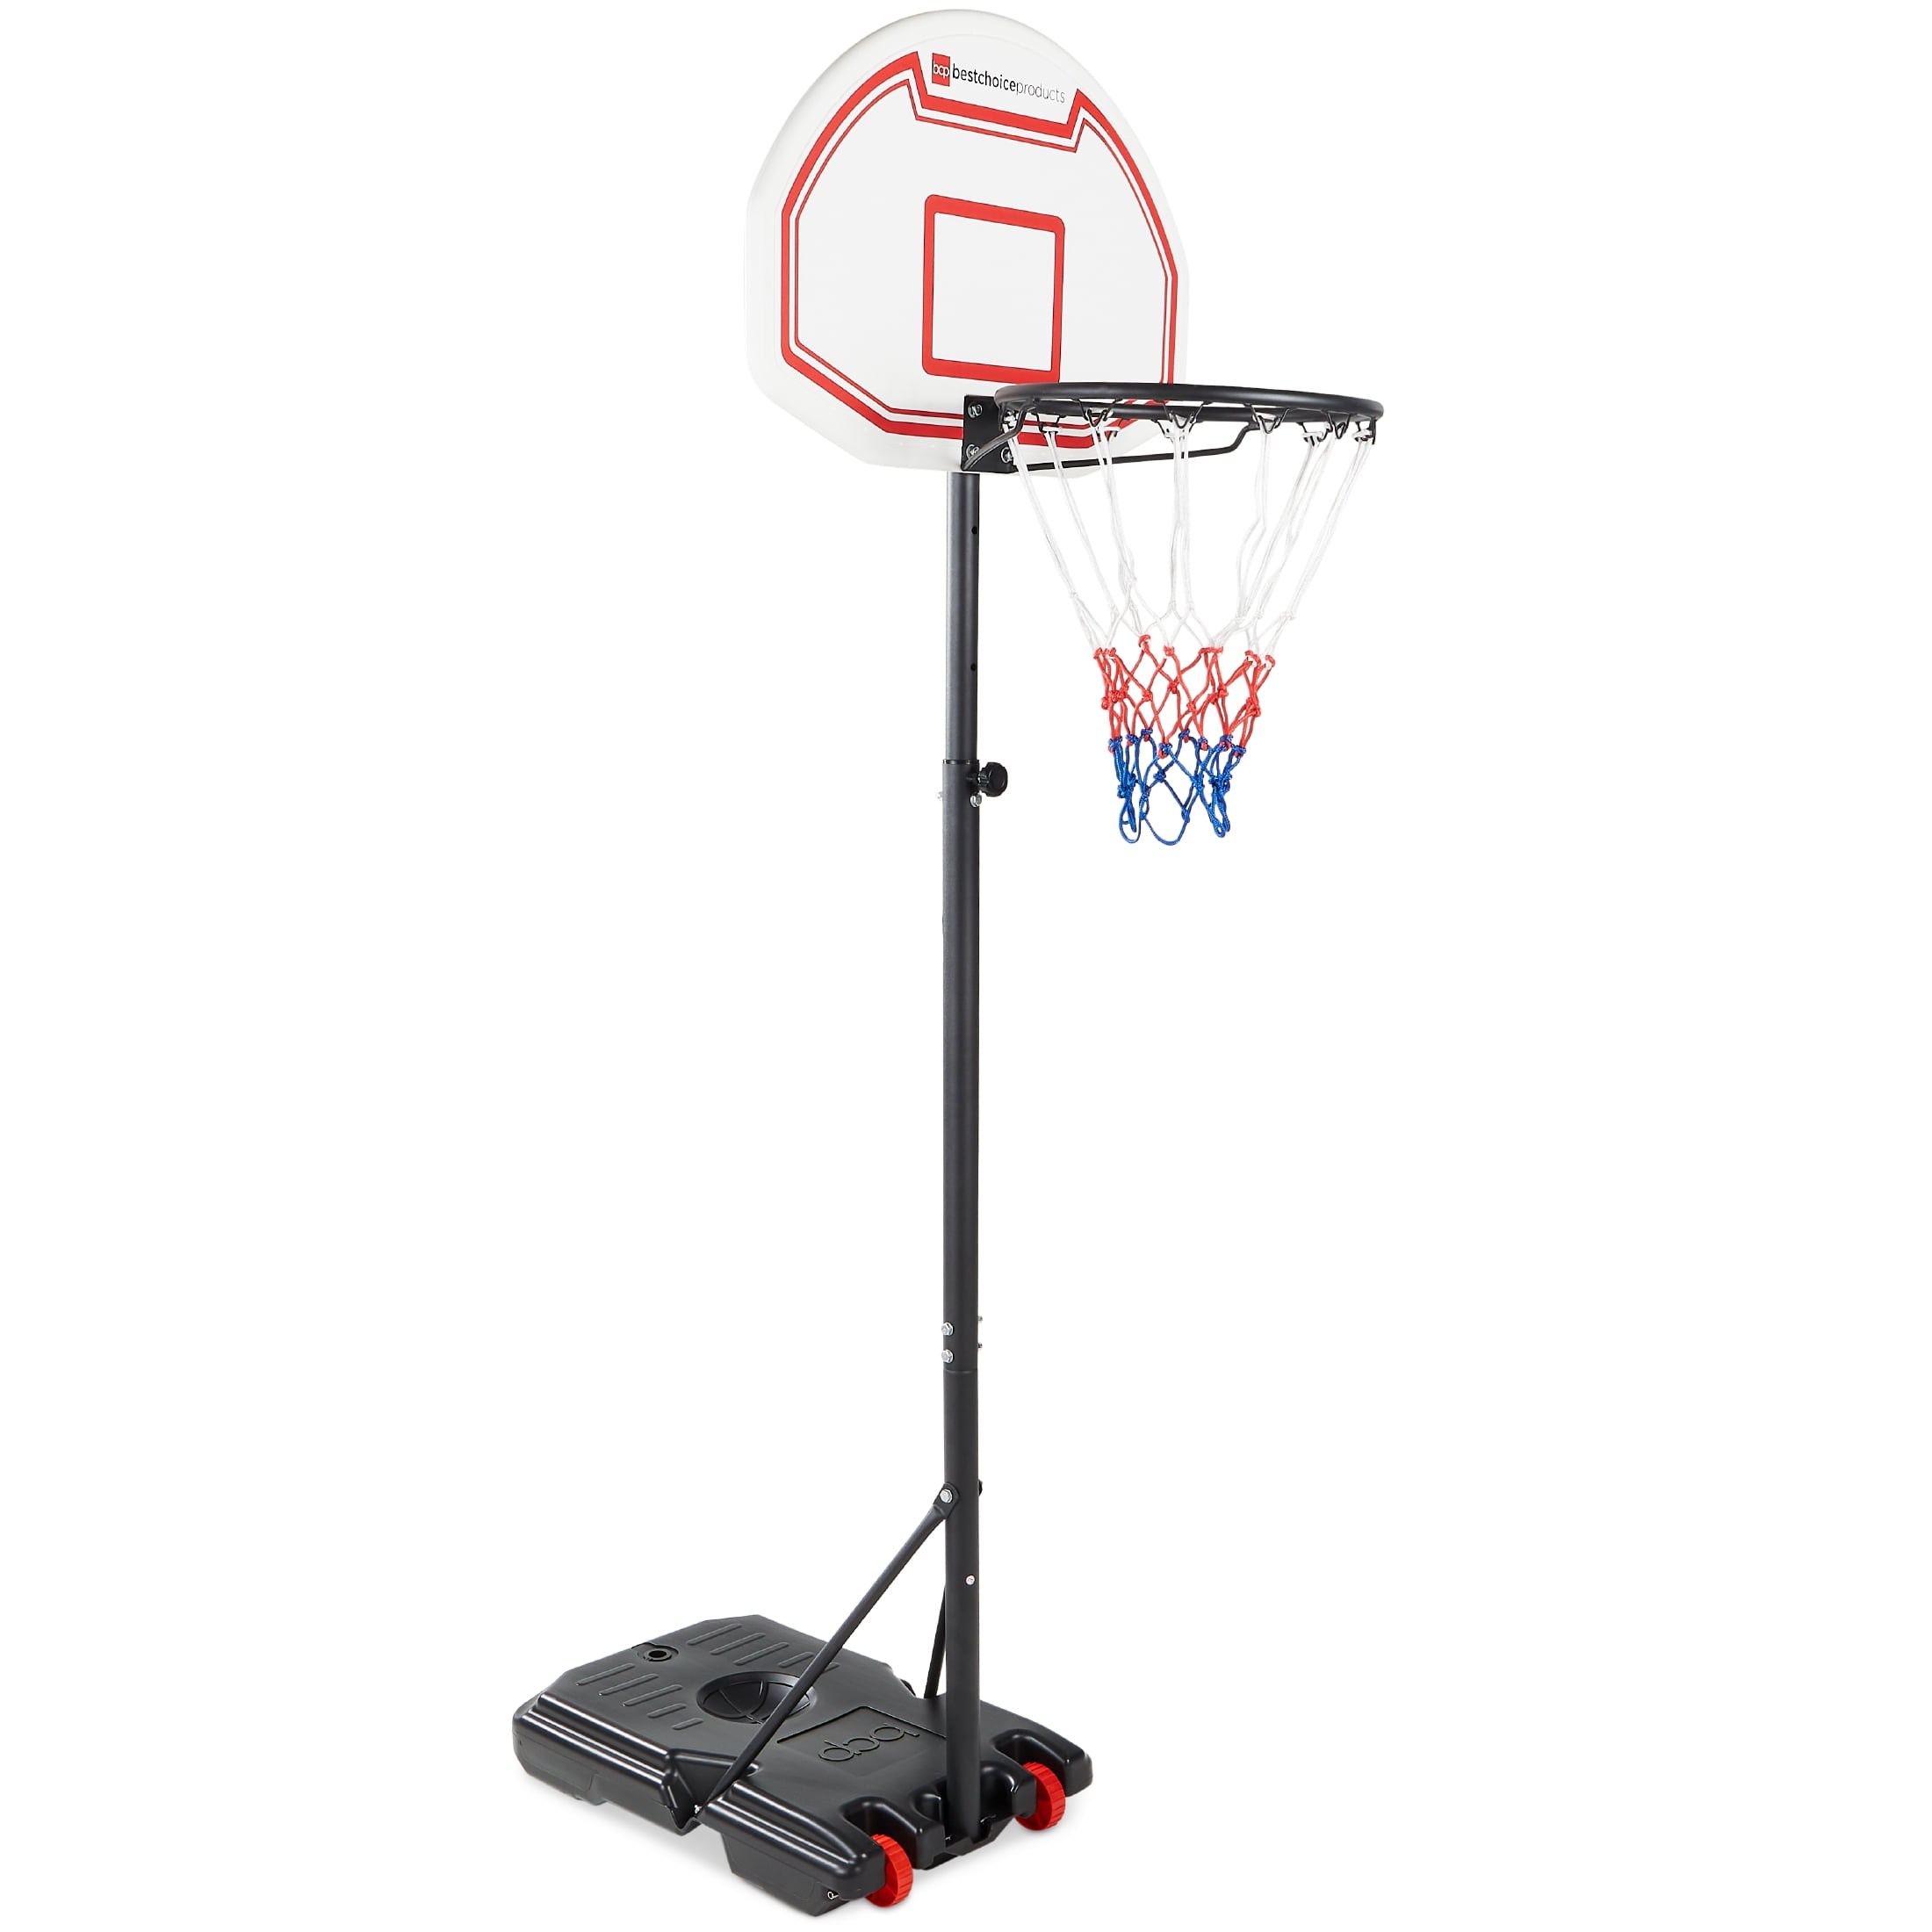 Height Adjustable Basketball Hoop System Portable Backboard Indoor Outdoor Kids 